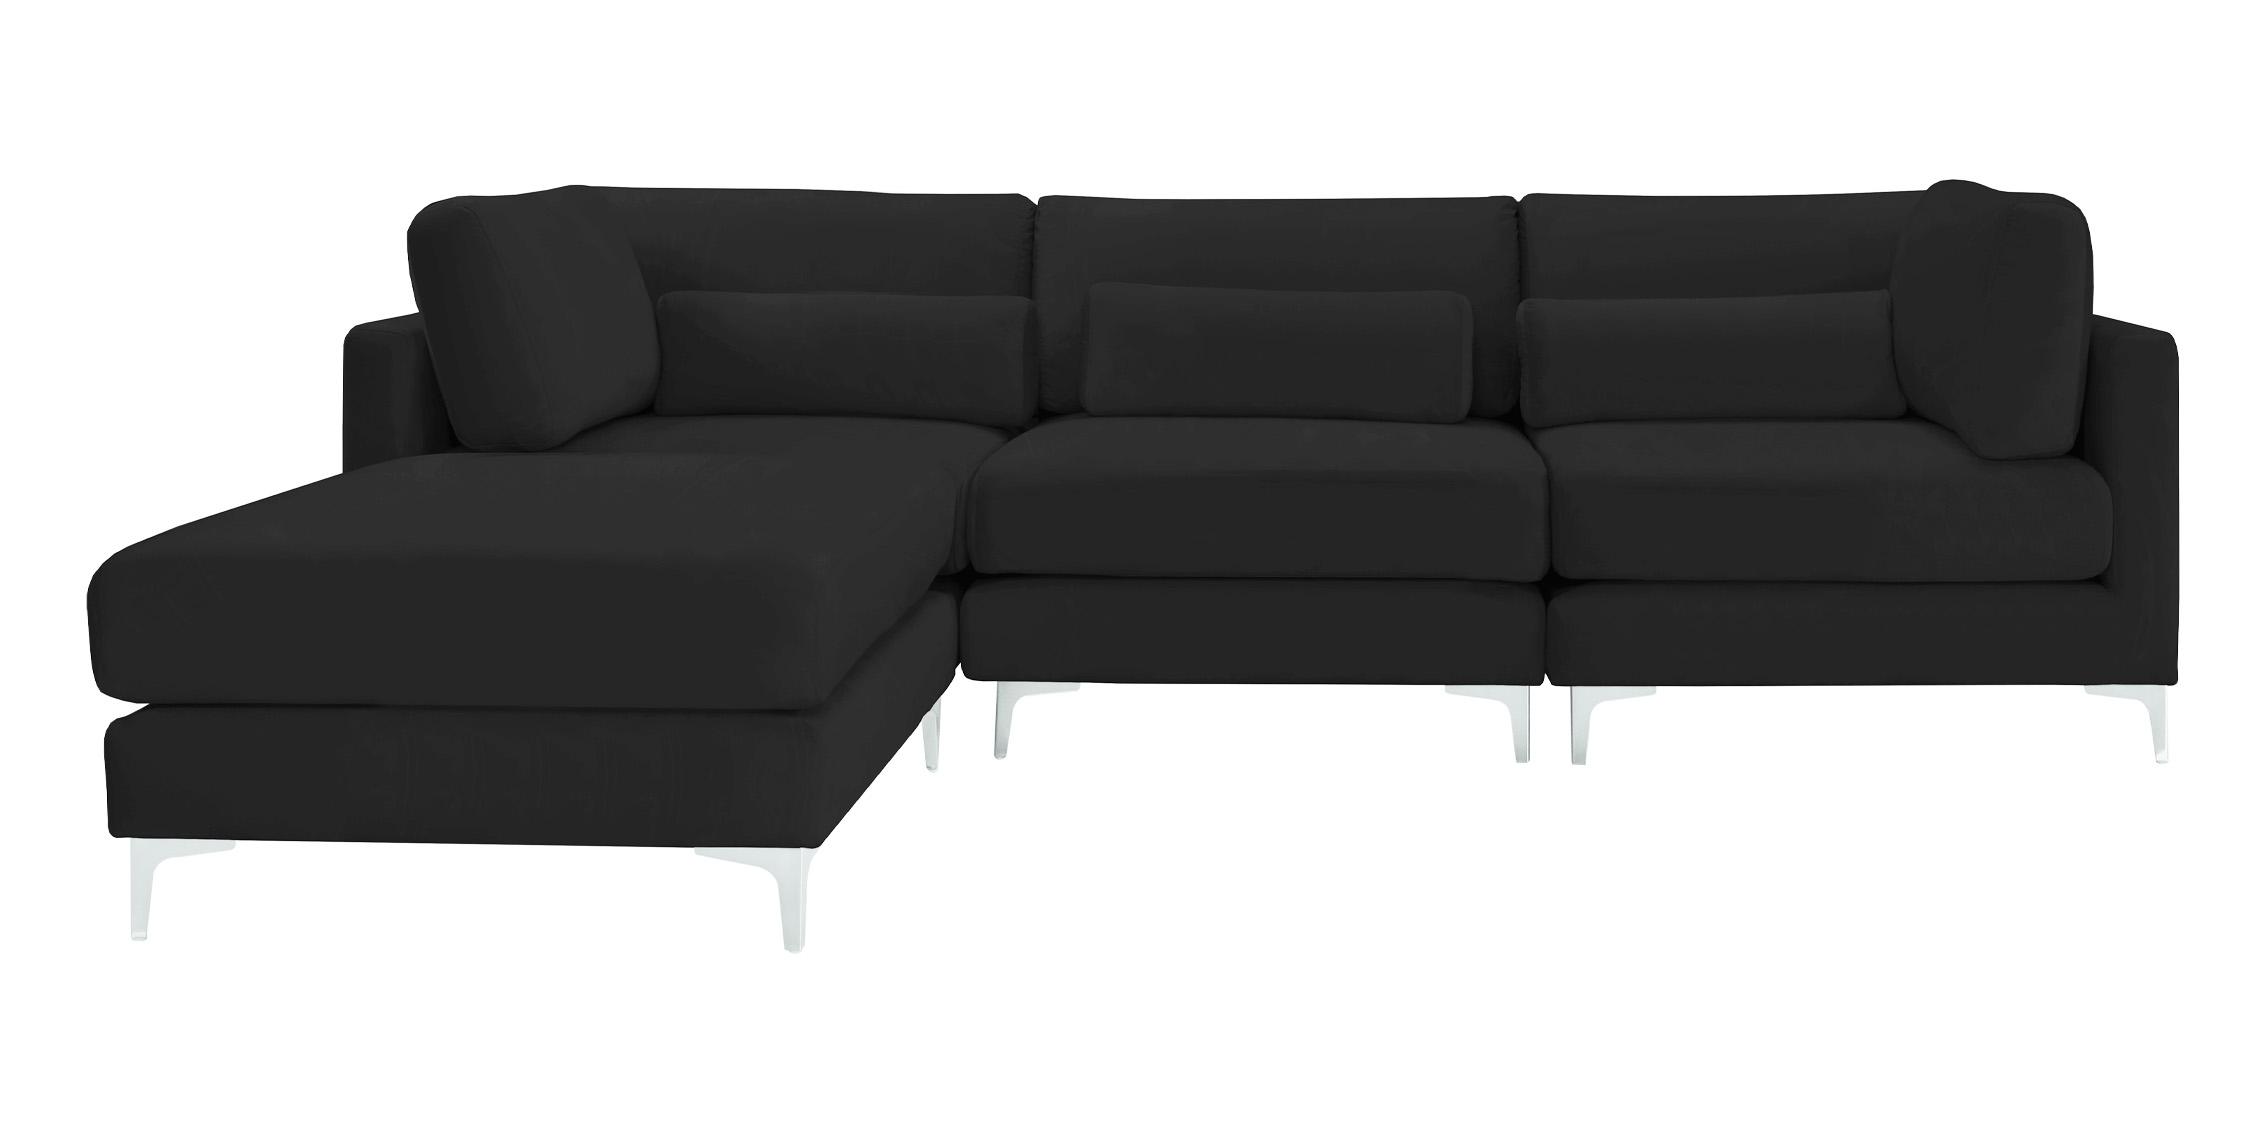 

    
Meridian Furniture JULIA 605Black-Sec4A Modular Sectional Sofa Black 605Black-Sec4A
